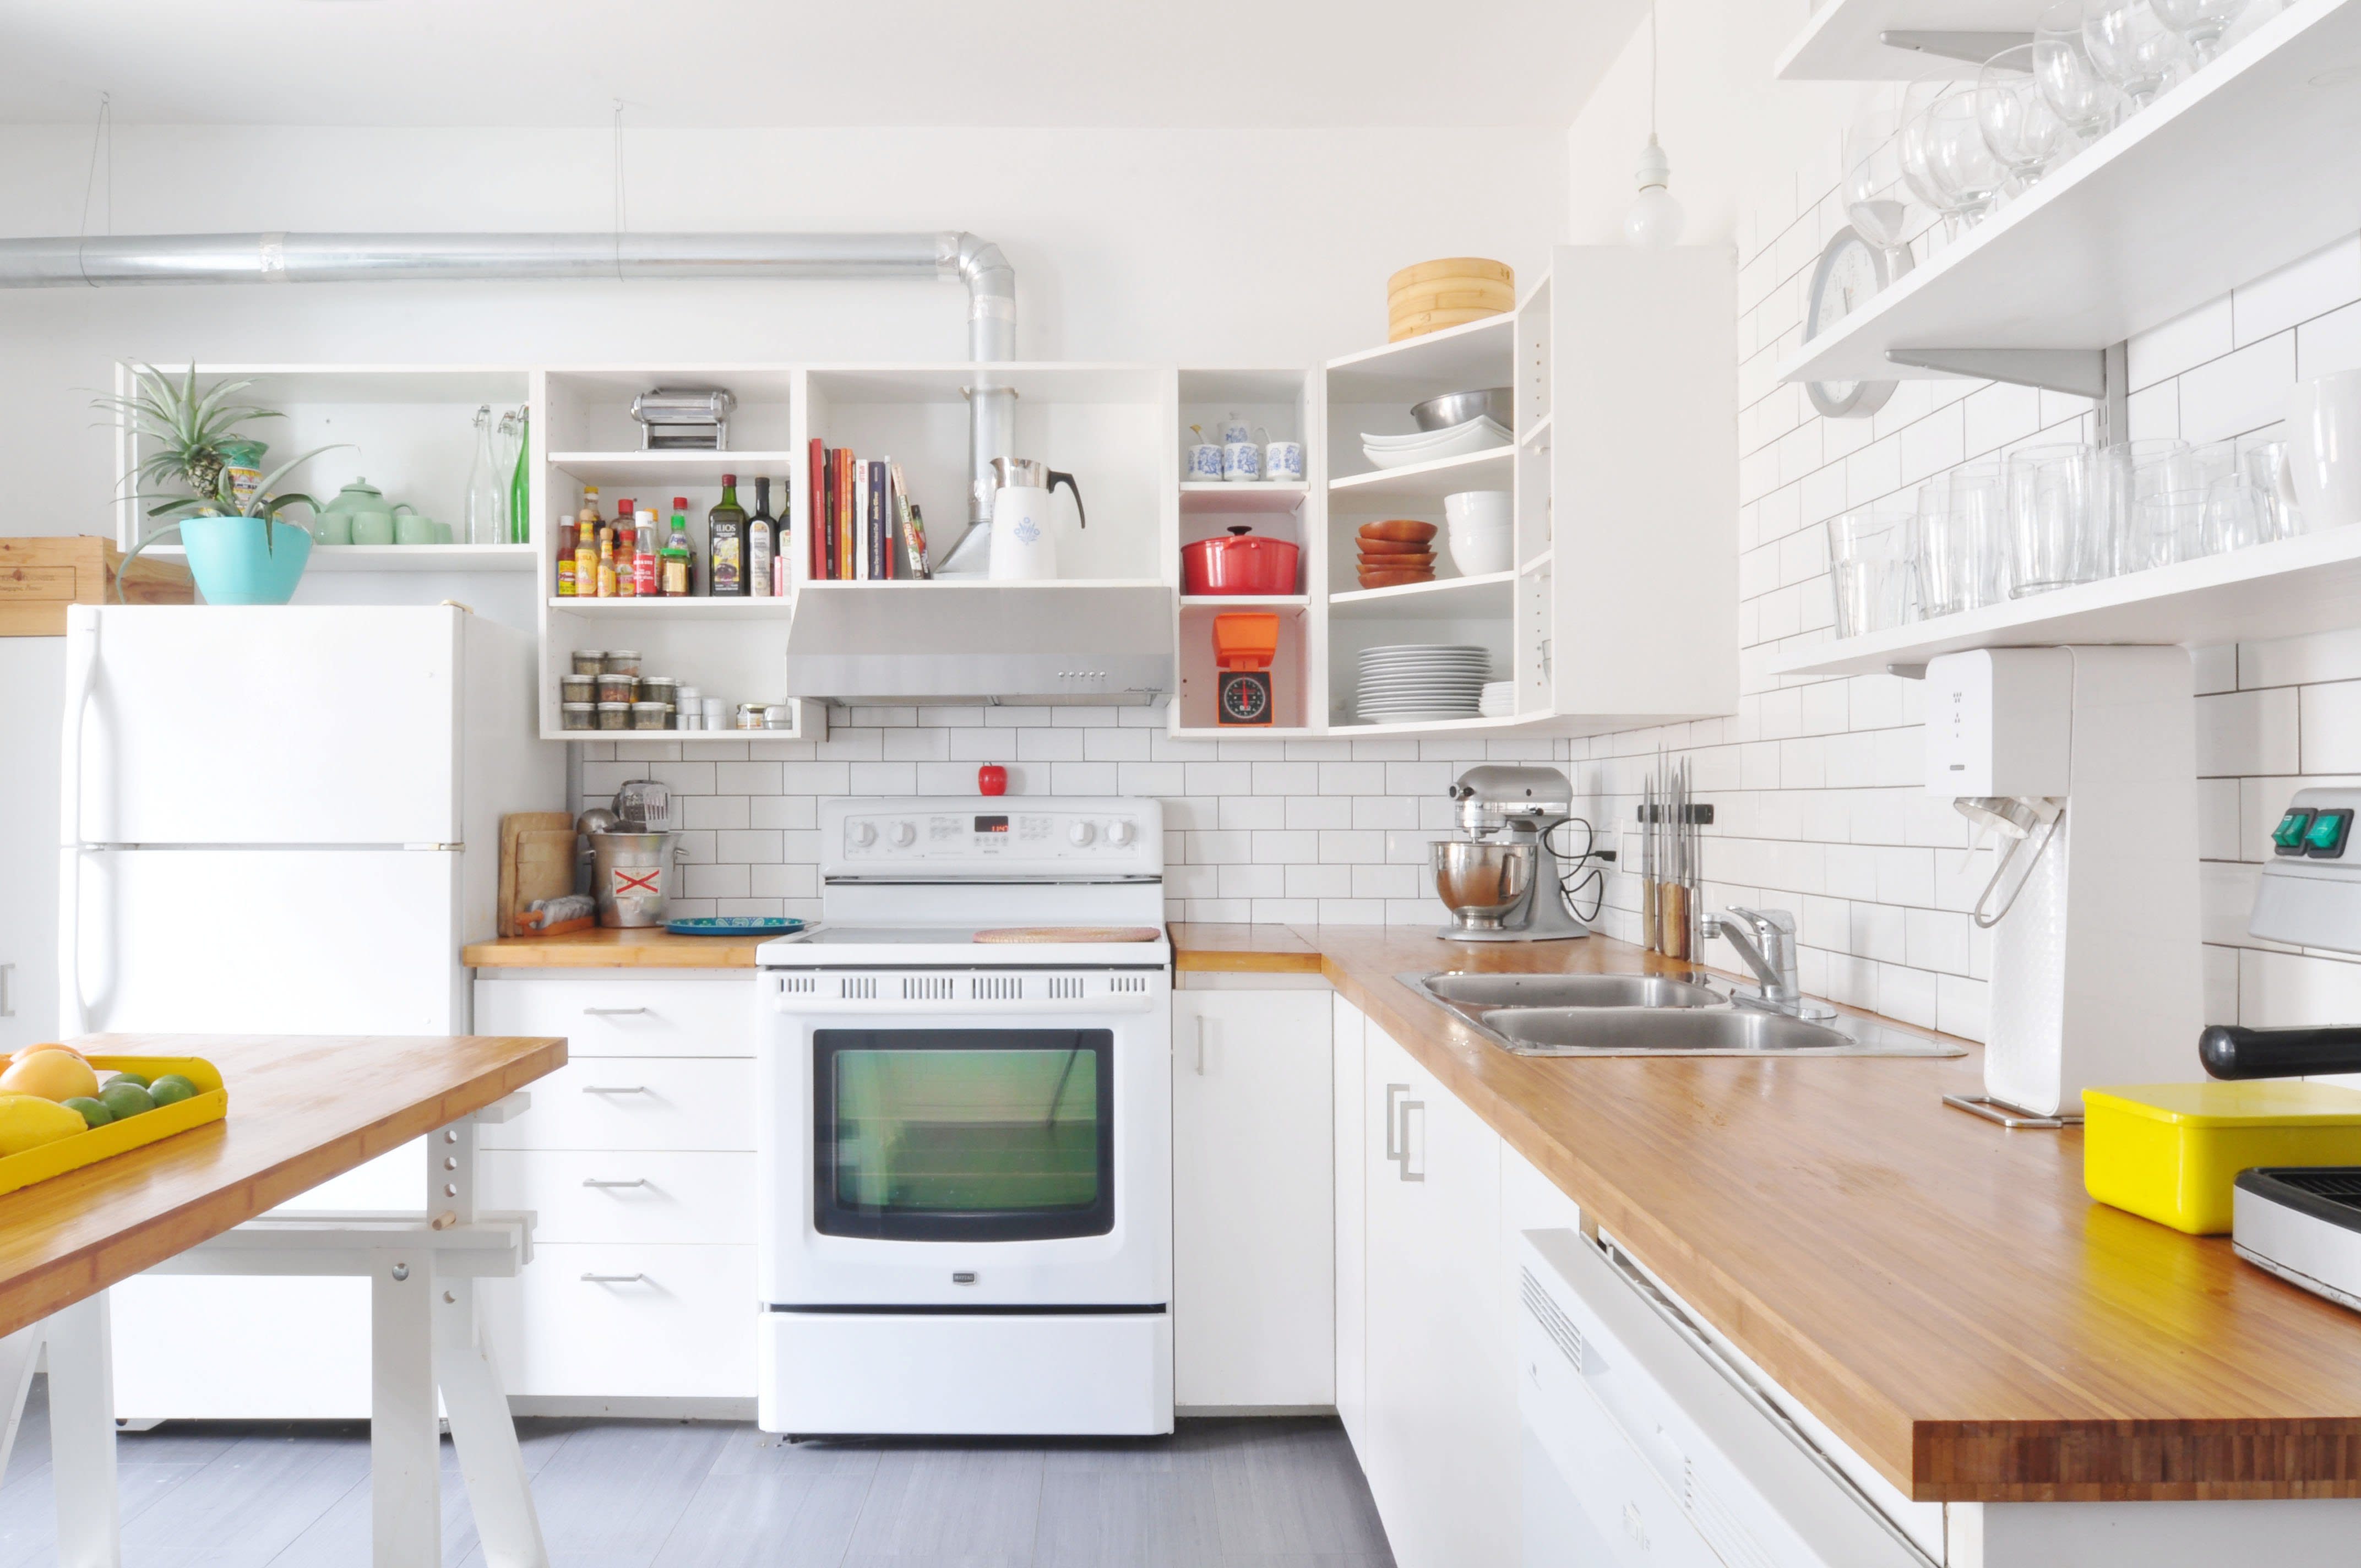 28 Best KitchenAid Mixers in Kitchen Setting ideas